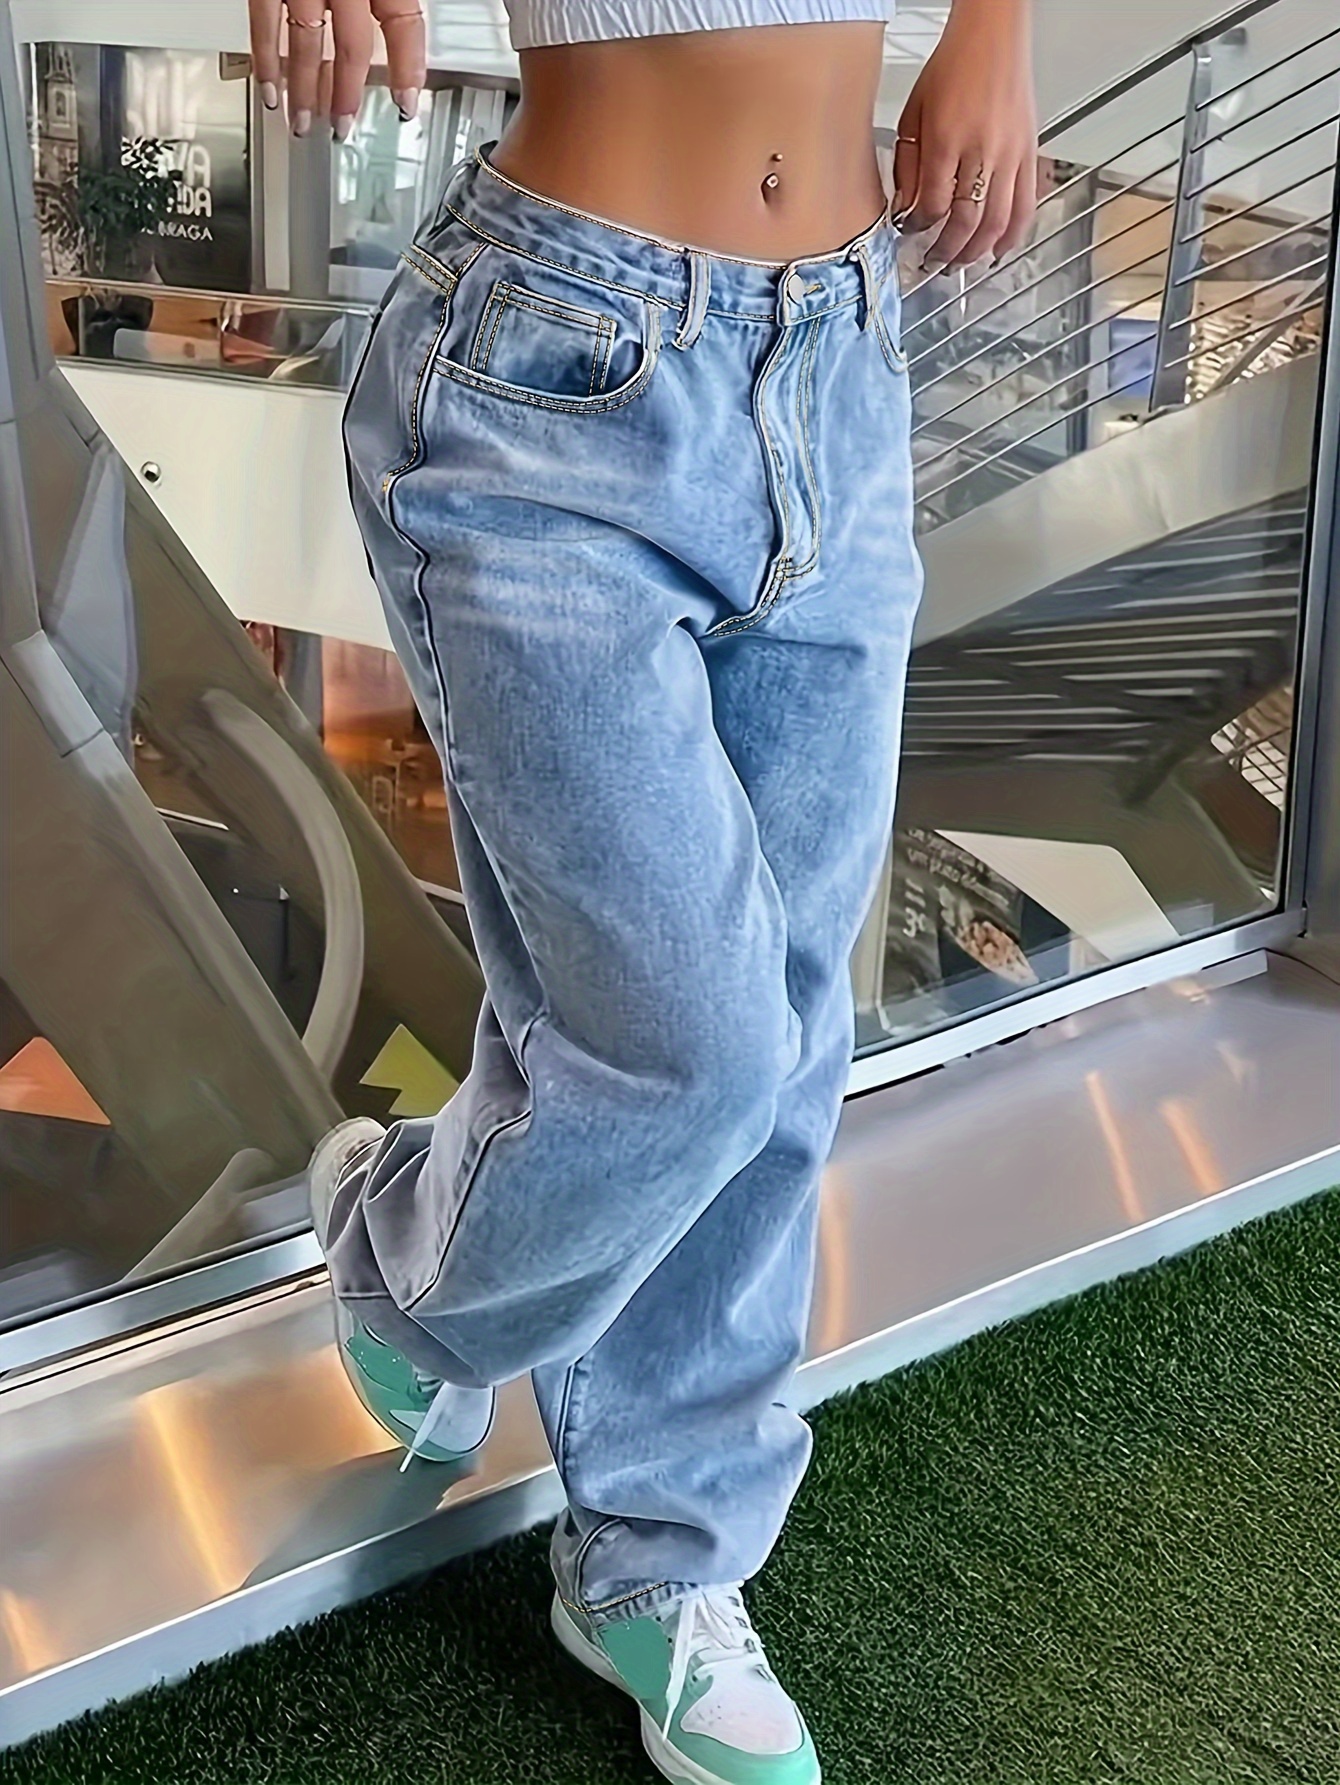 Jeans Sueltos Mujer